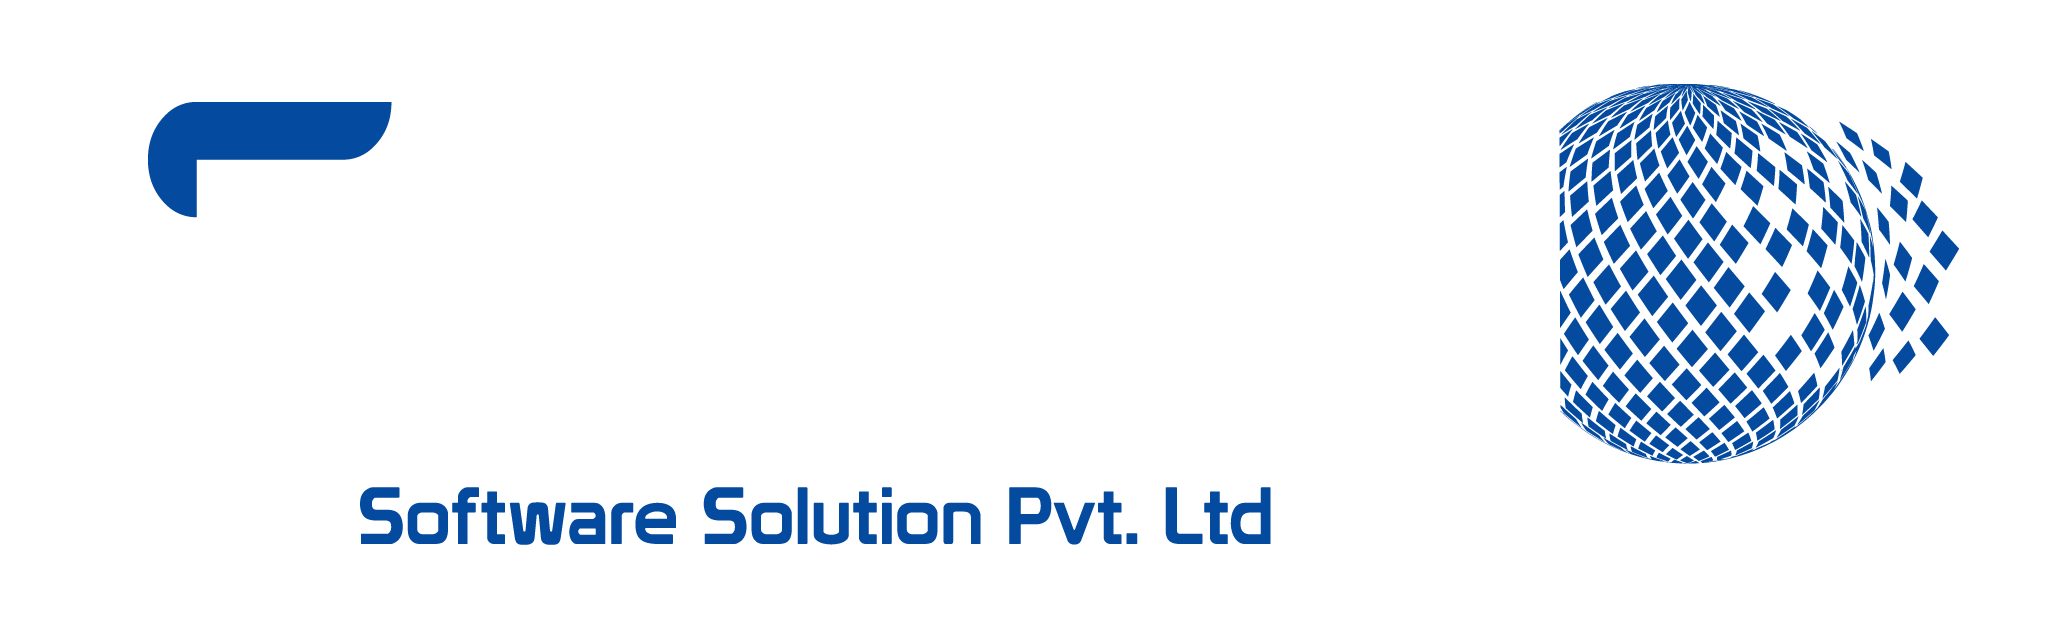 Satkar Software Solution Pvt. Ltd - Contact Details